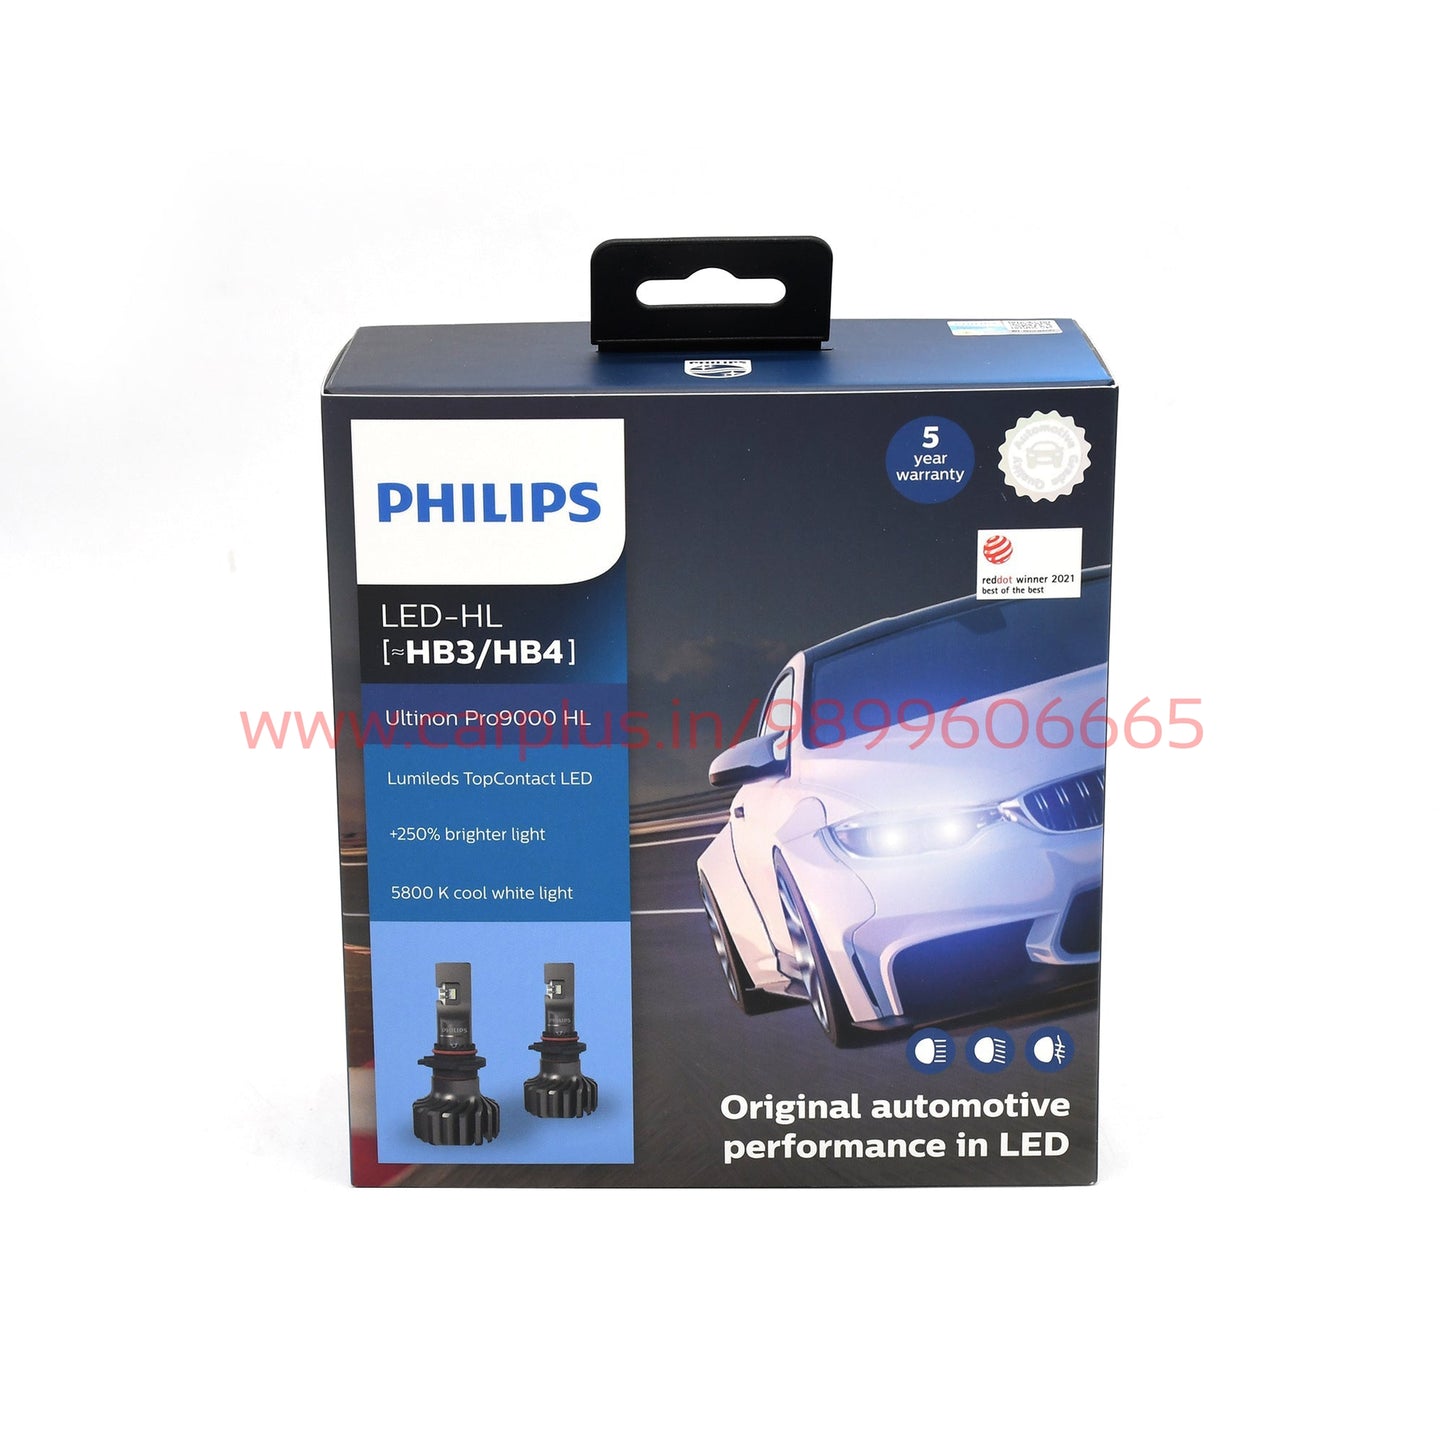 PHILIPS Ultinon Pro9000 LED Car Headlight Bulbs